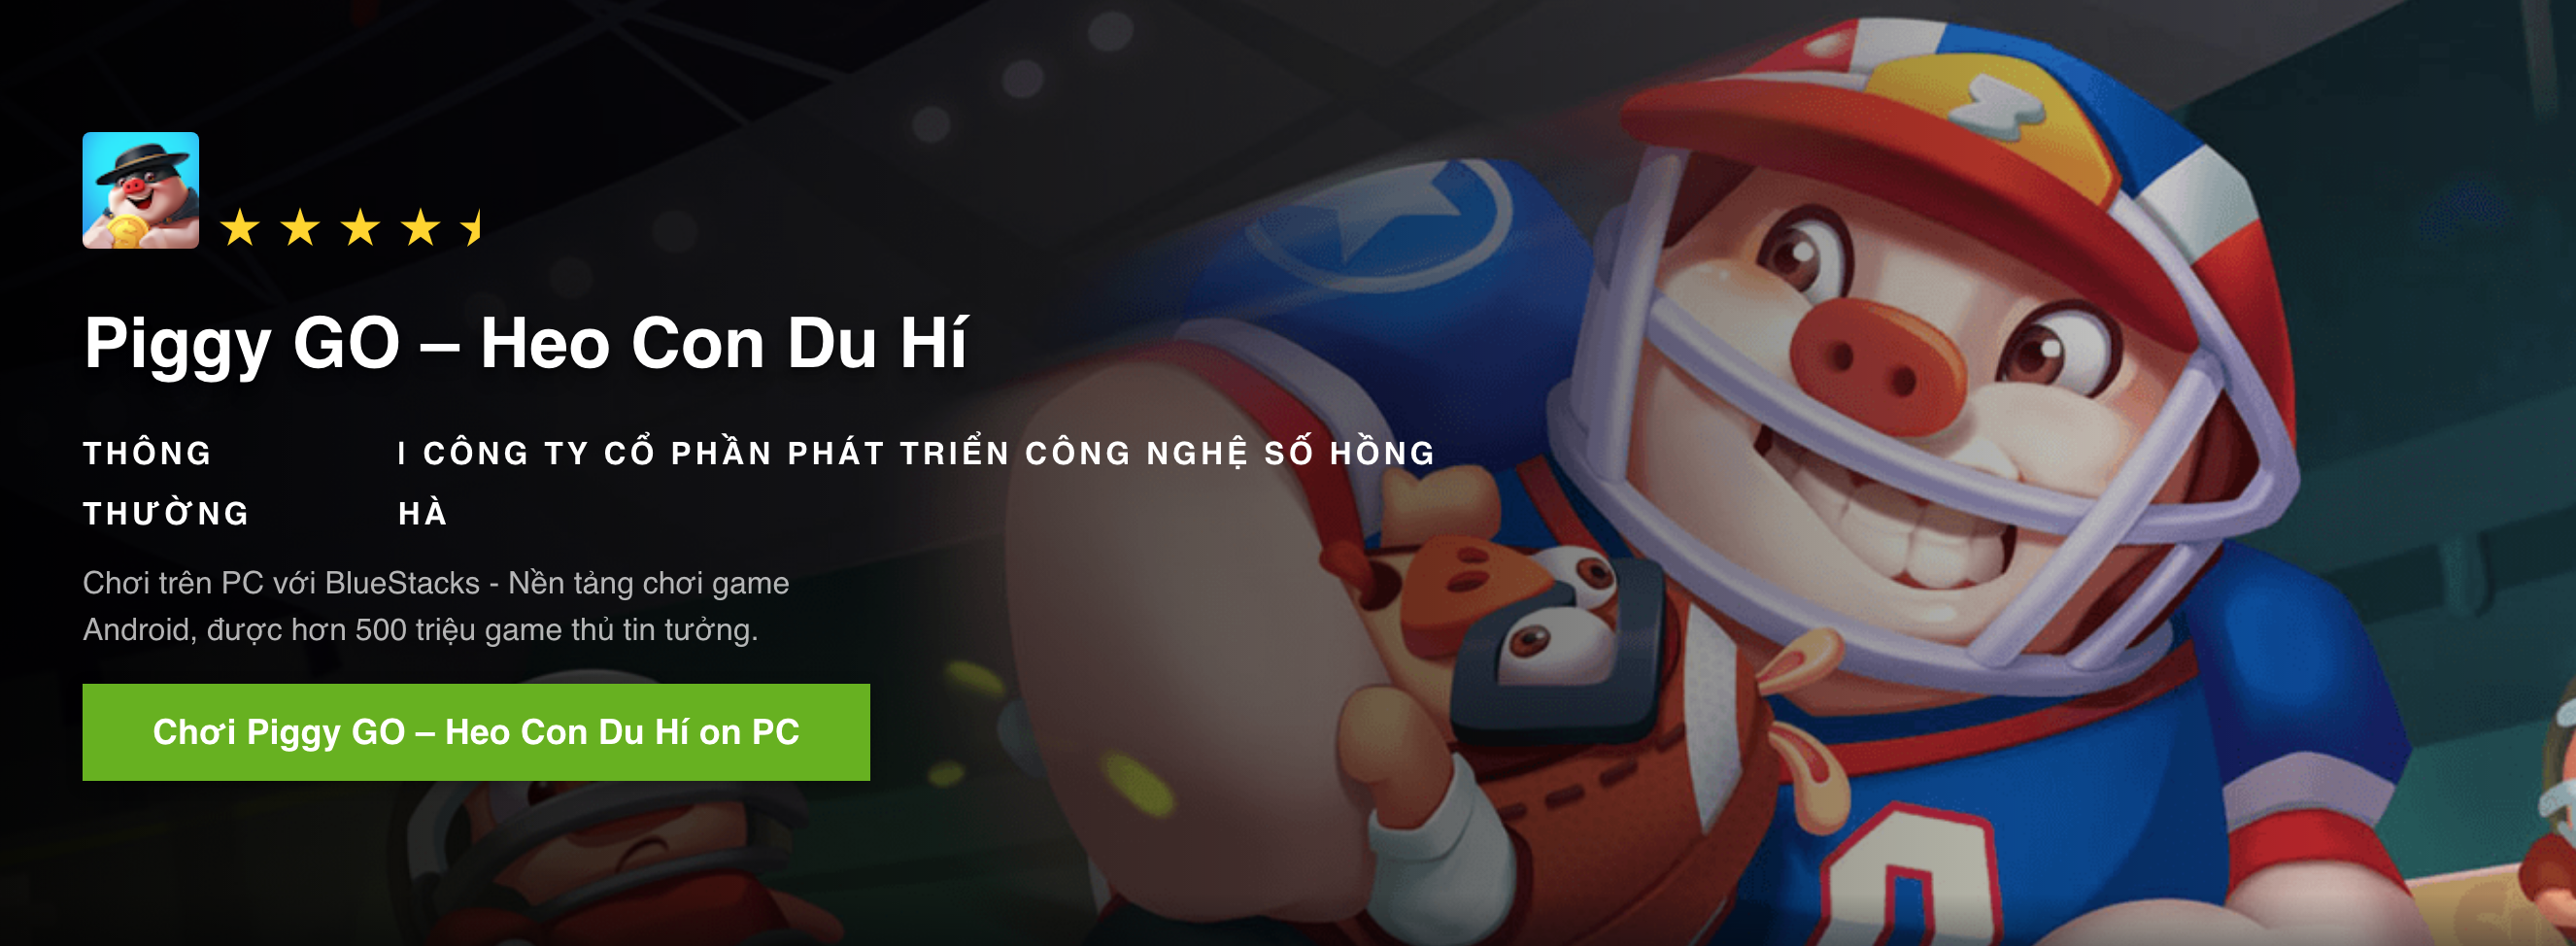 Chơi Piggy GO – Heo Con Du Hí on PC